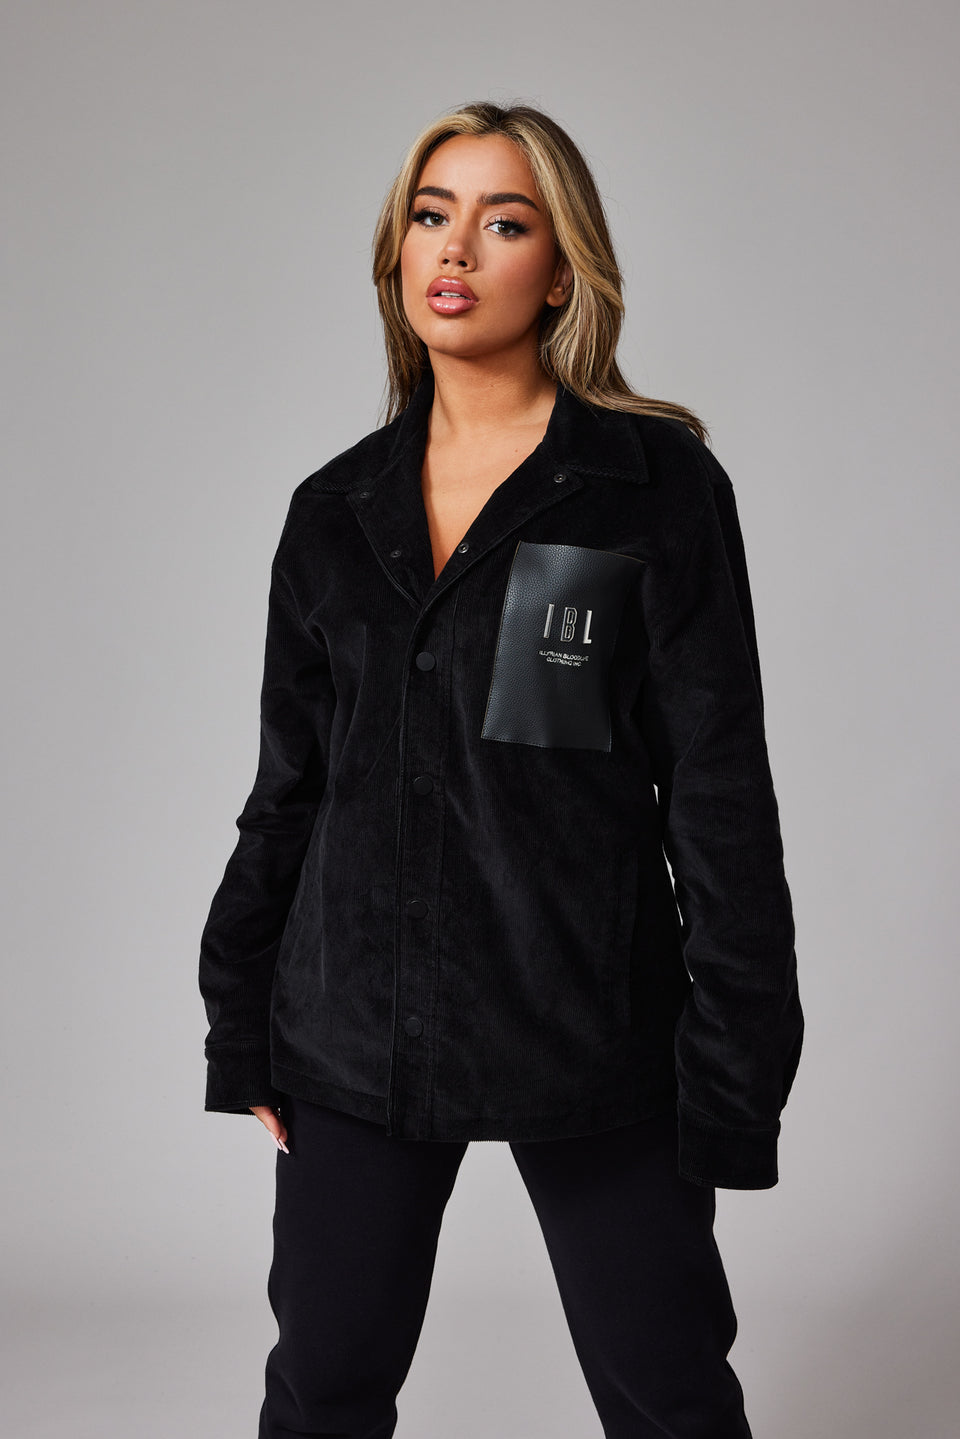 IBL Shirt Jacket - Black